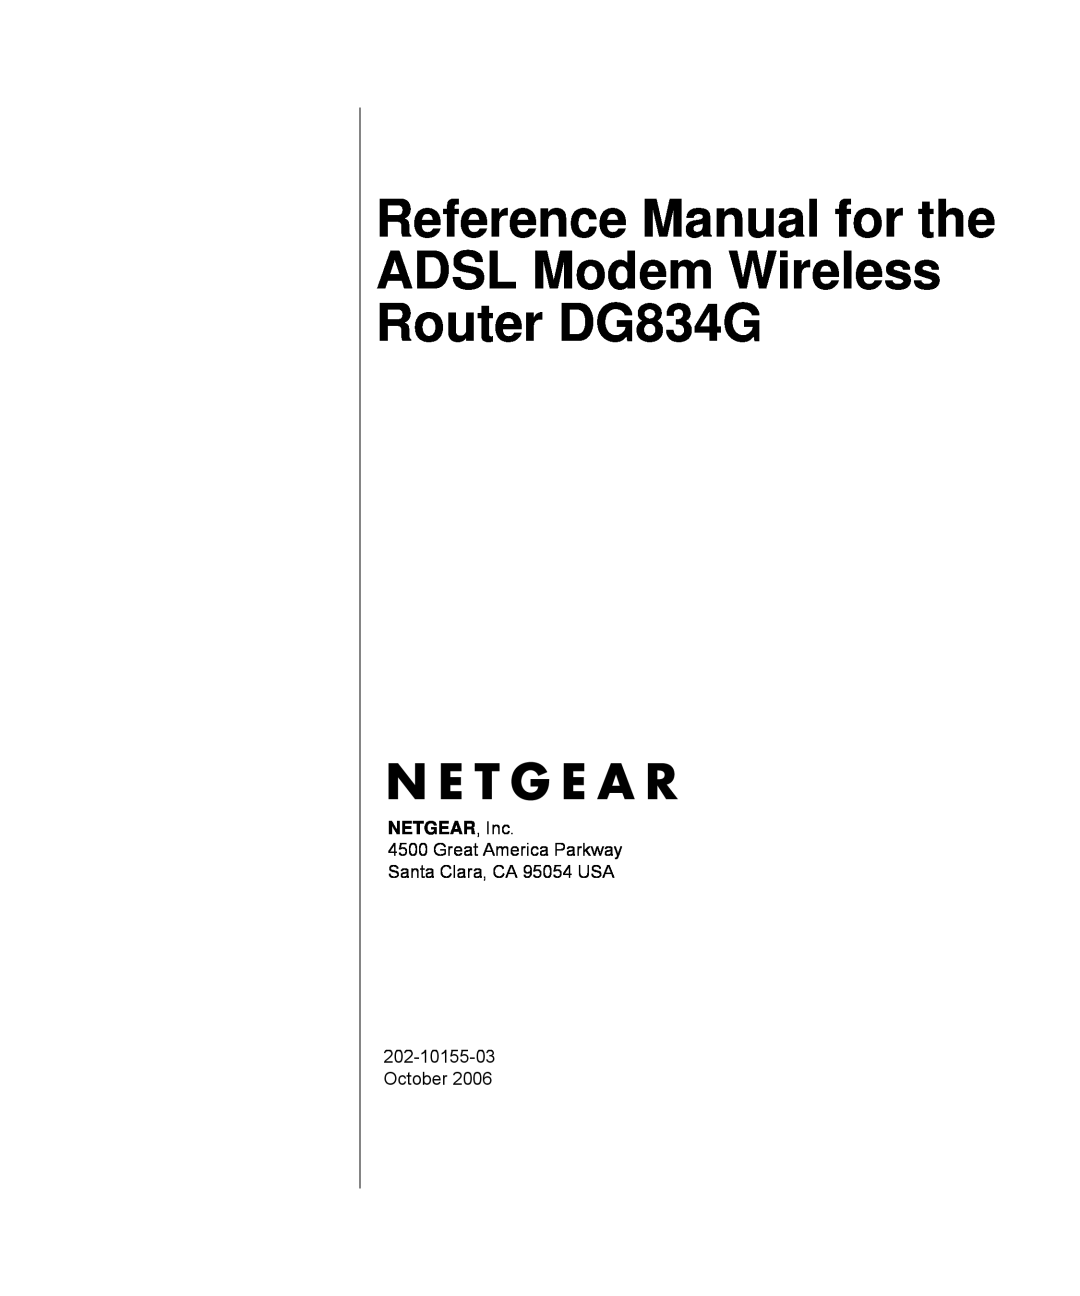 NETGEAR manual Reference Manual for the ADSL Modem Wireless Router DG834G, NETGEAR, Inc 